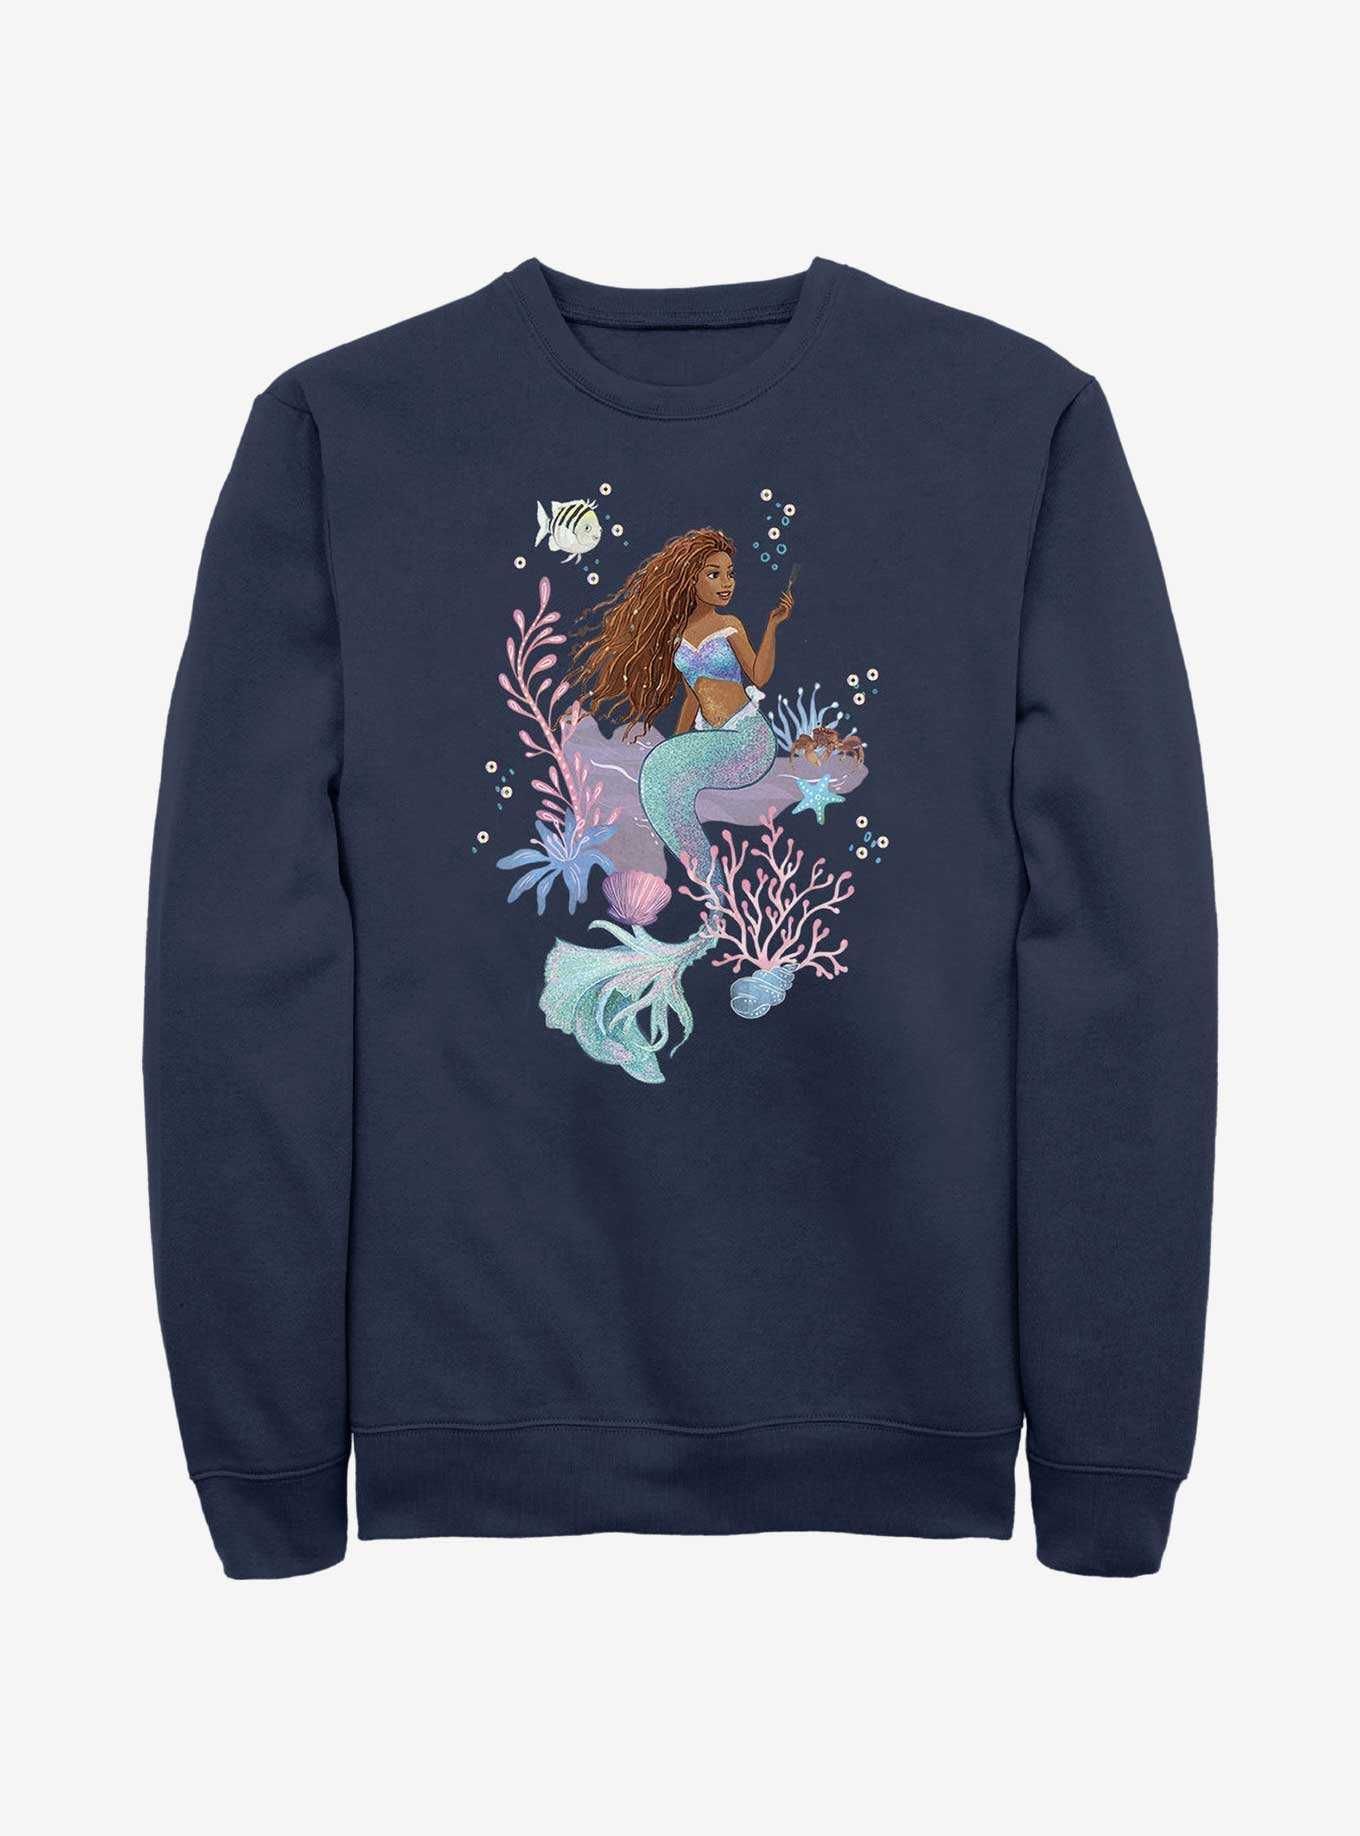 Disney The Little Mermaid Ariel Dinglehopper Sweatshirt, , hi-res